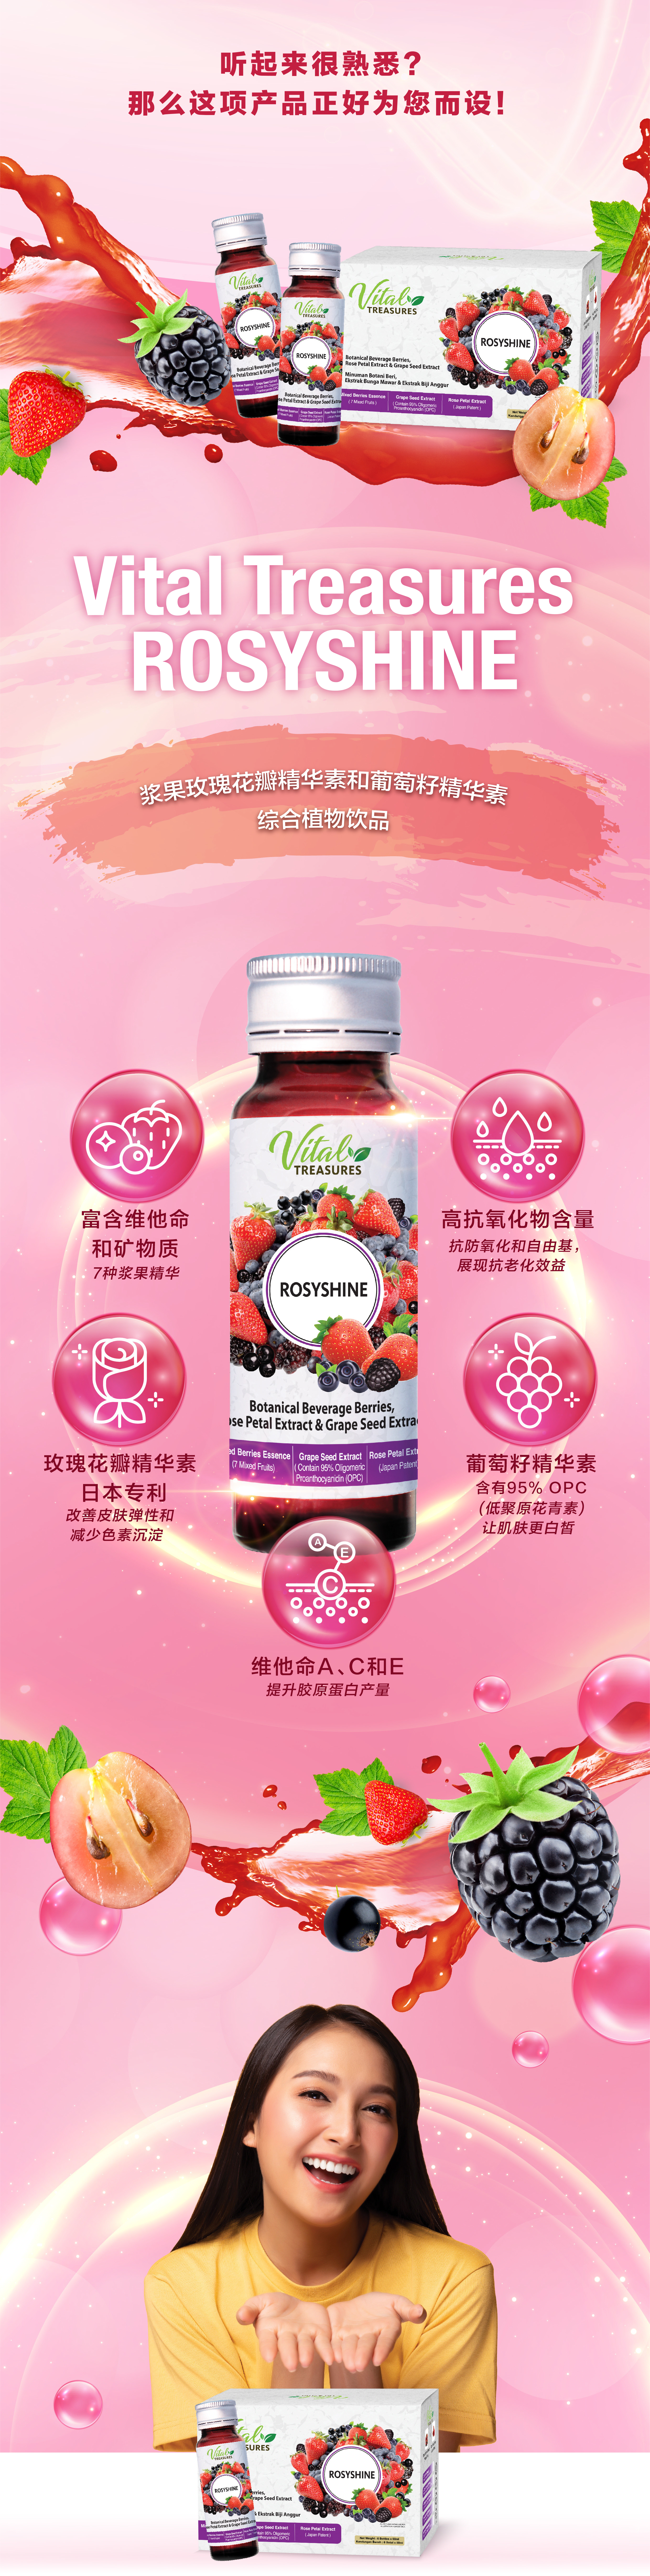 VITAL TREASURES ROSYSHINE 浆果玫瑰花瓣精华素和葡萄籽精华素综合植物饮品 